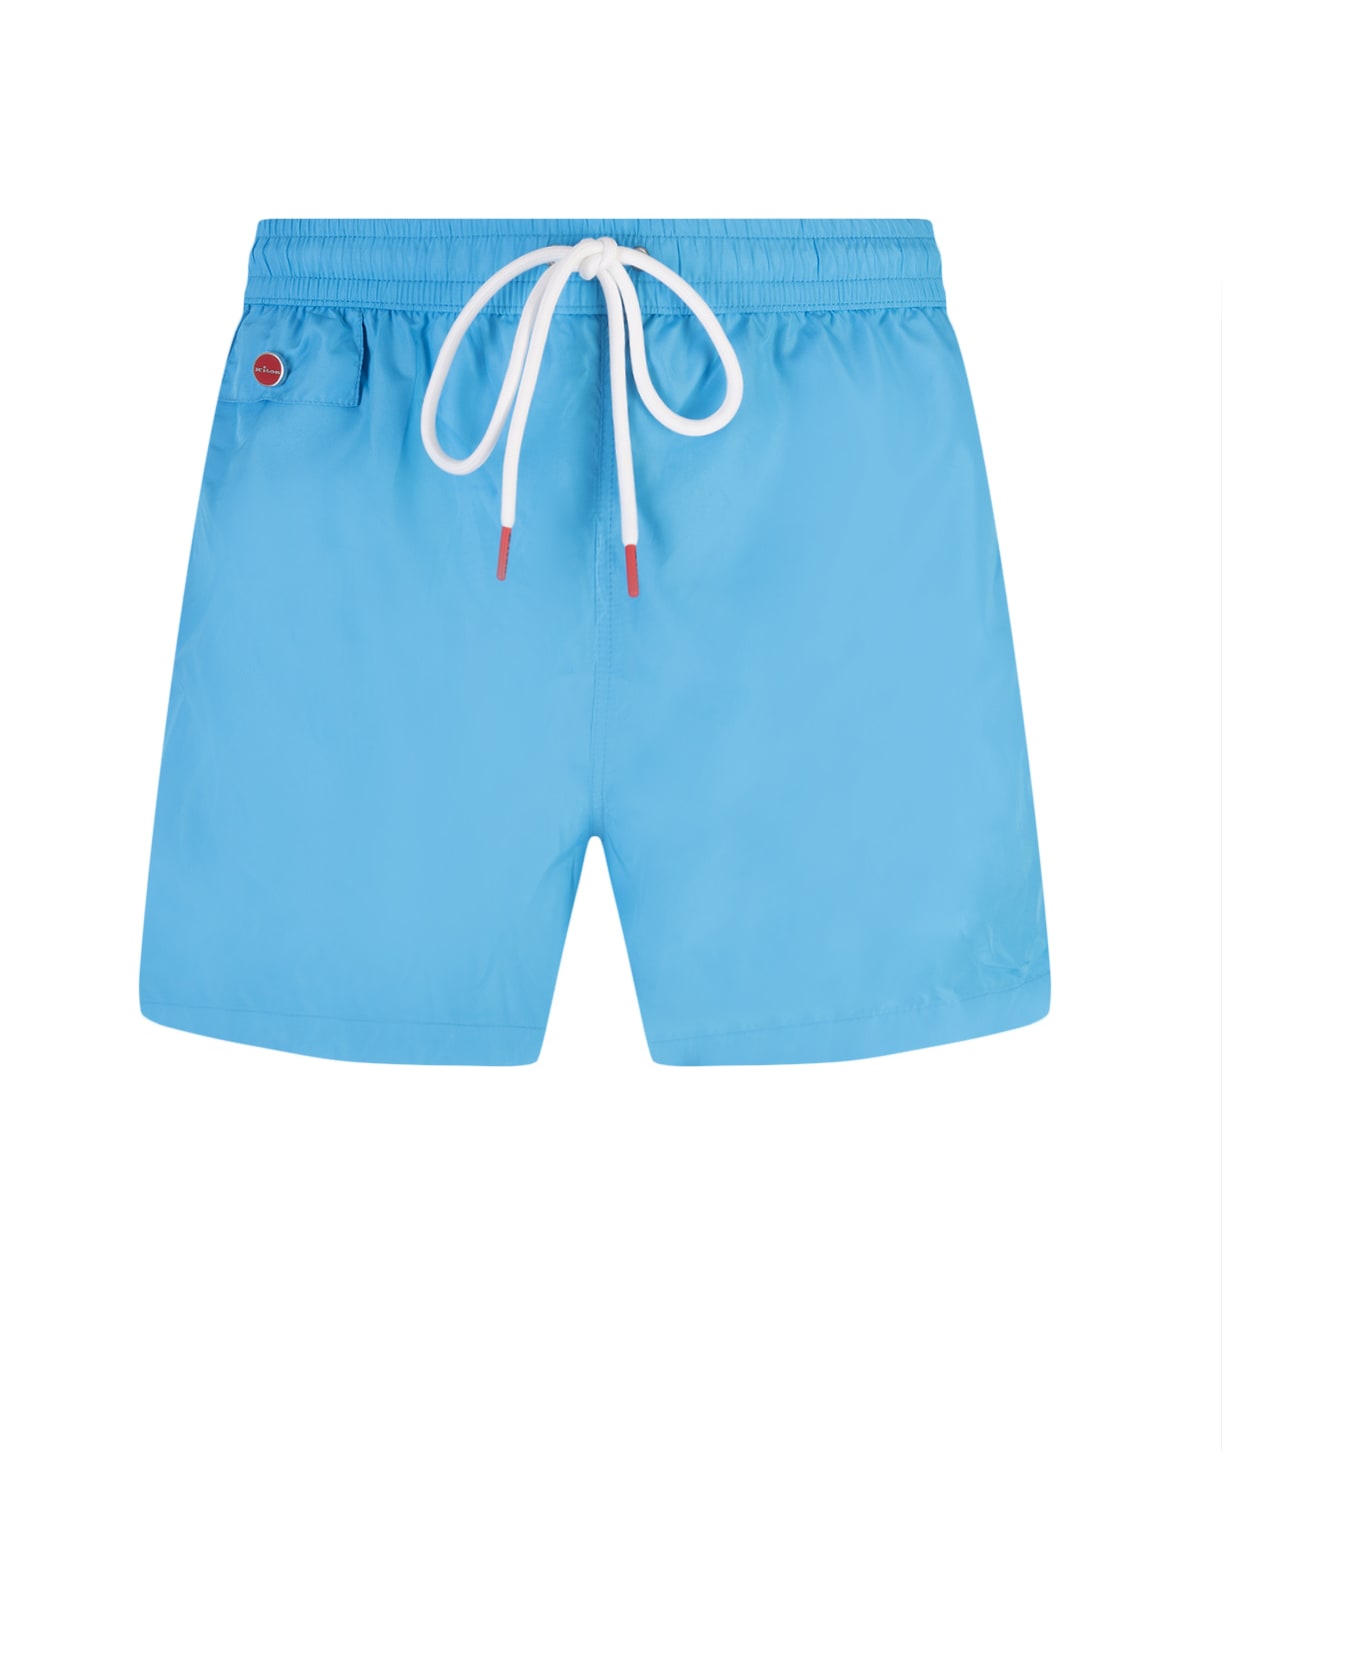 Kiton Sky Blue Swim Shorts - Blue